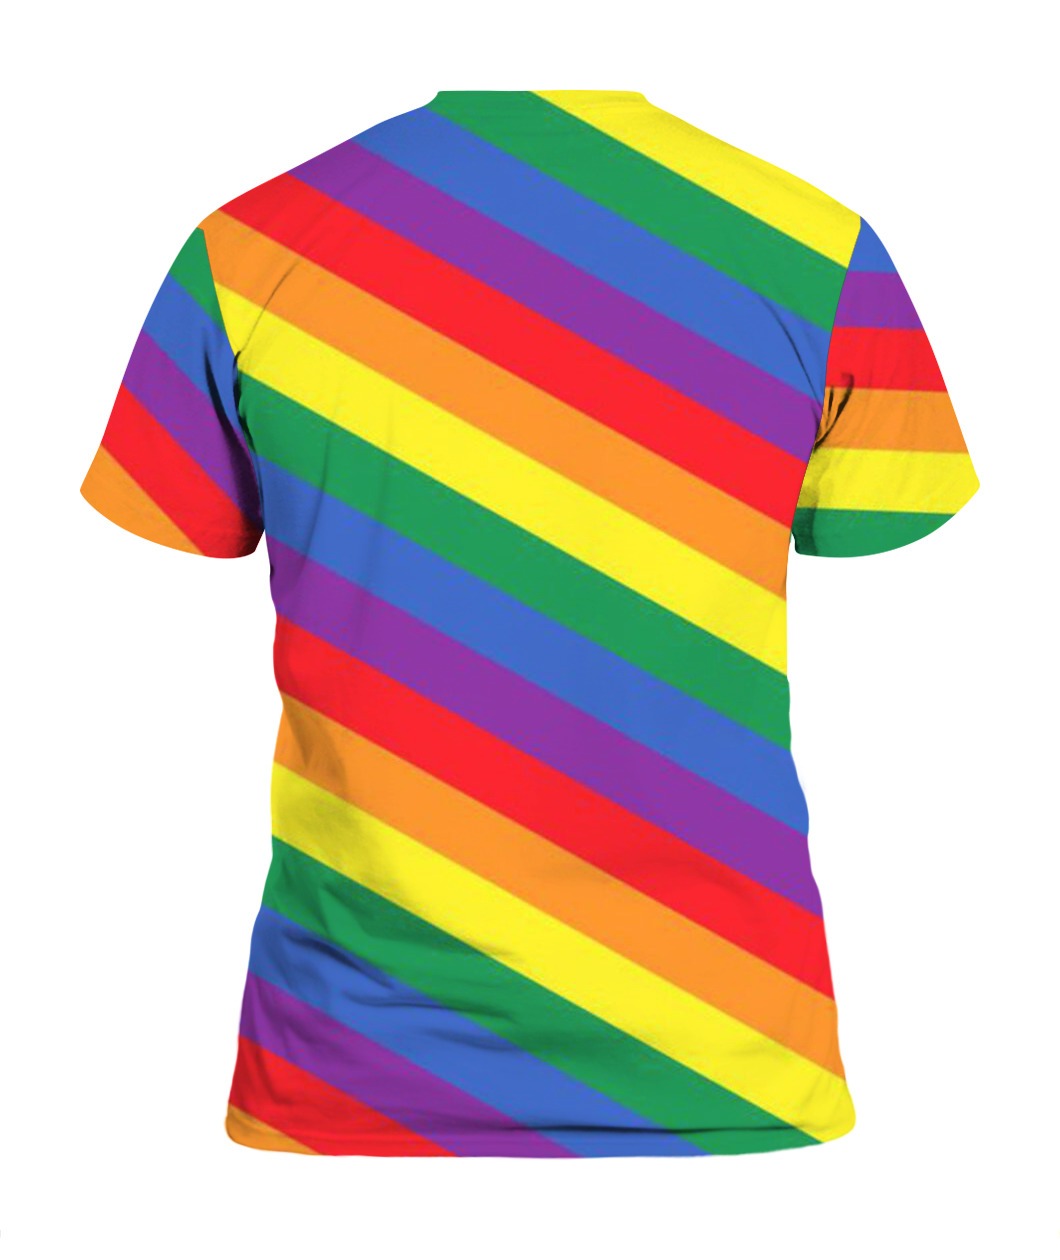 Lgbt Rainbow Striped 3D All Over Printed Shirt/ Sublimation Pride Full Printed Tee Shirt/ Rainbow Lgbtq 3D Shirts For Gay Lesbian